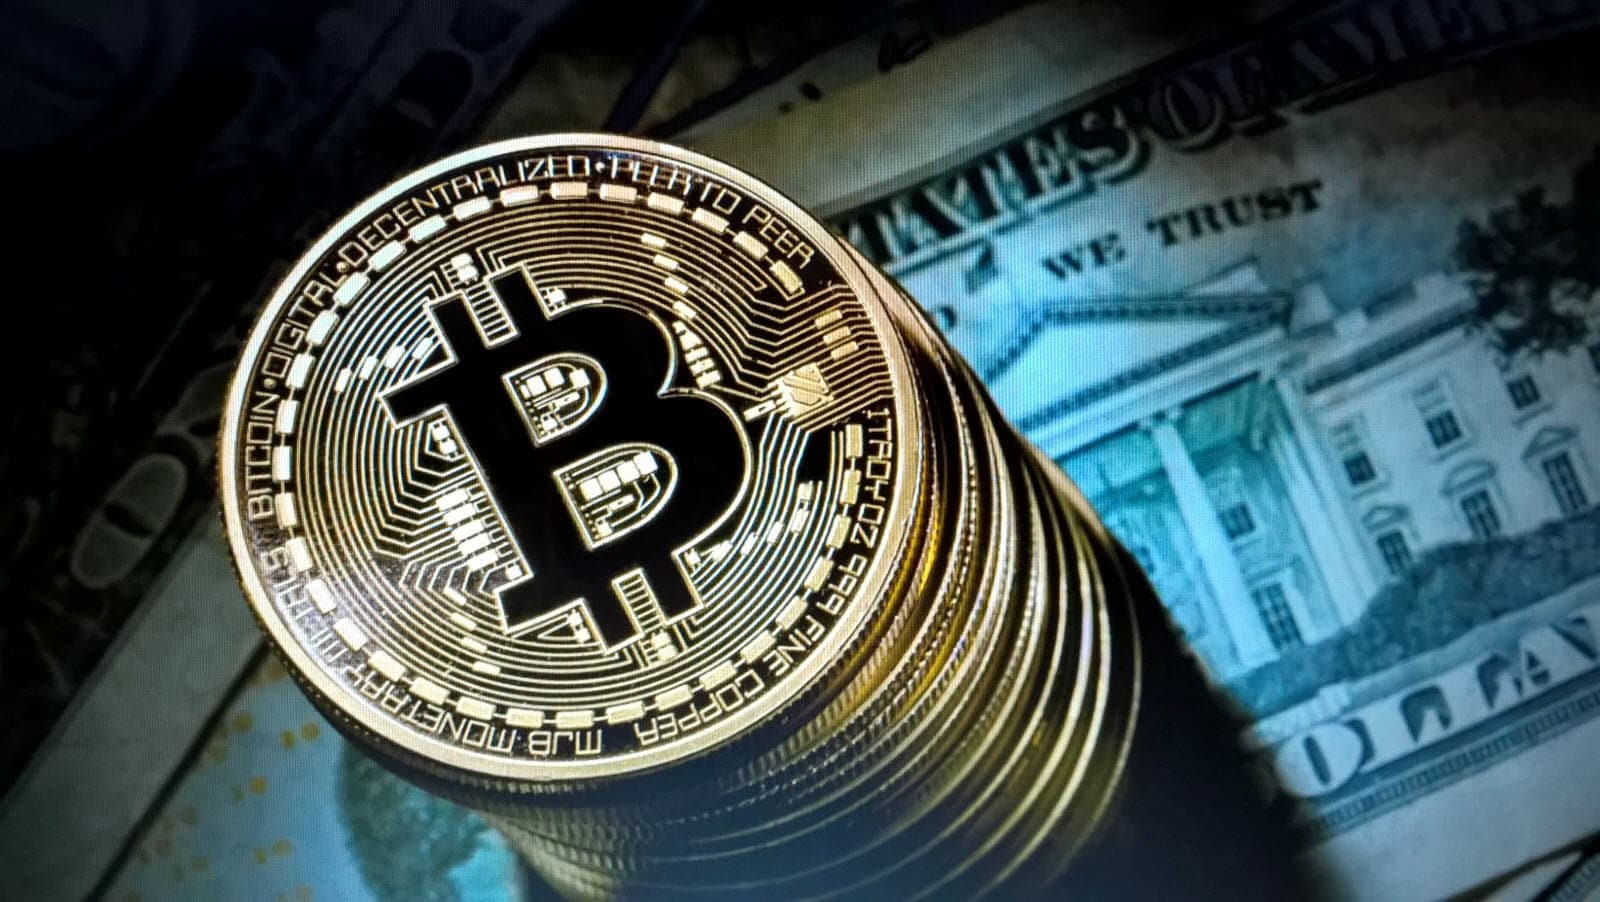 bitcoin est la premiere cryptomonnaie au monde un bitcoin vaut 51 900 euros photo julio pelaez 1635519580 - OnzedAfrik